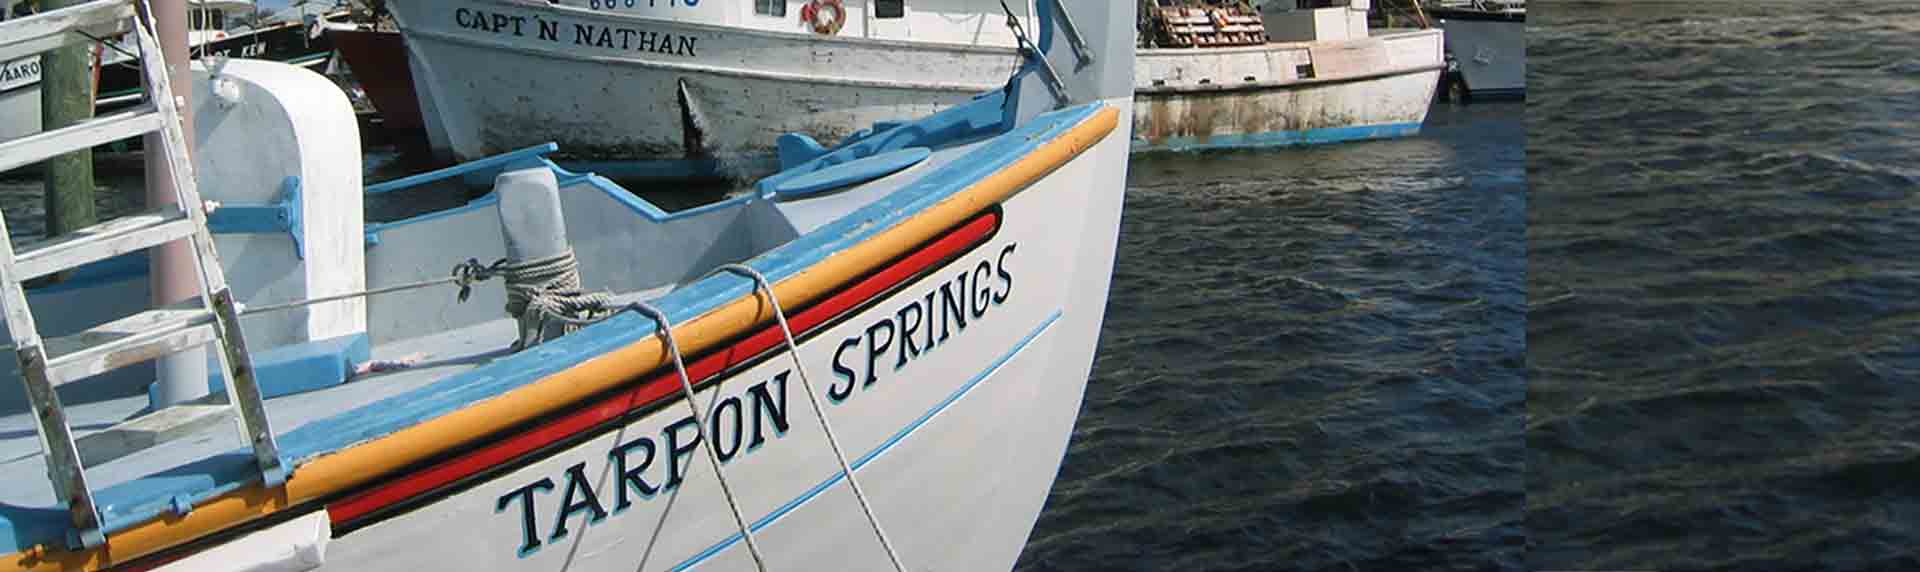 Yellow Sea Sponges – Spongeorama Sponge Factory – Tarpon Springs, FL